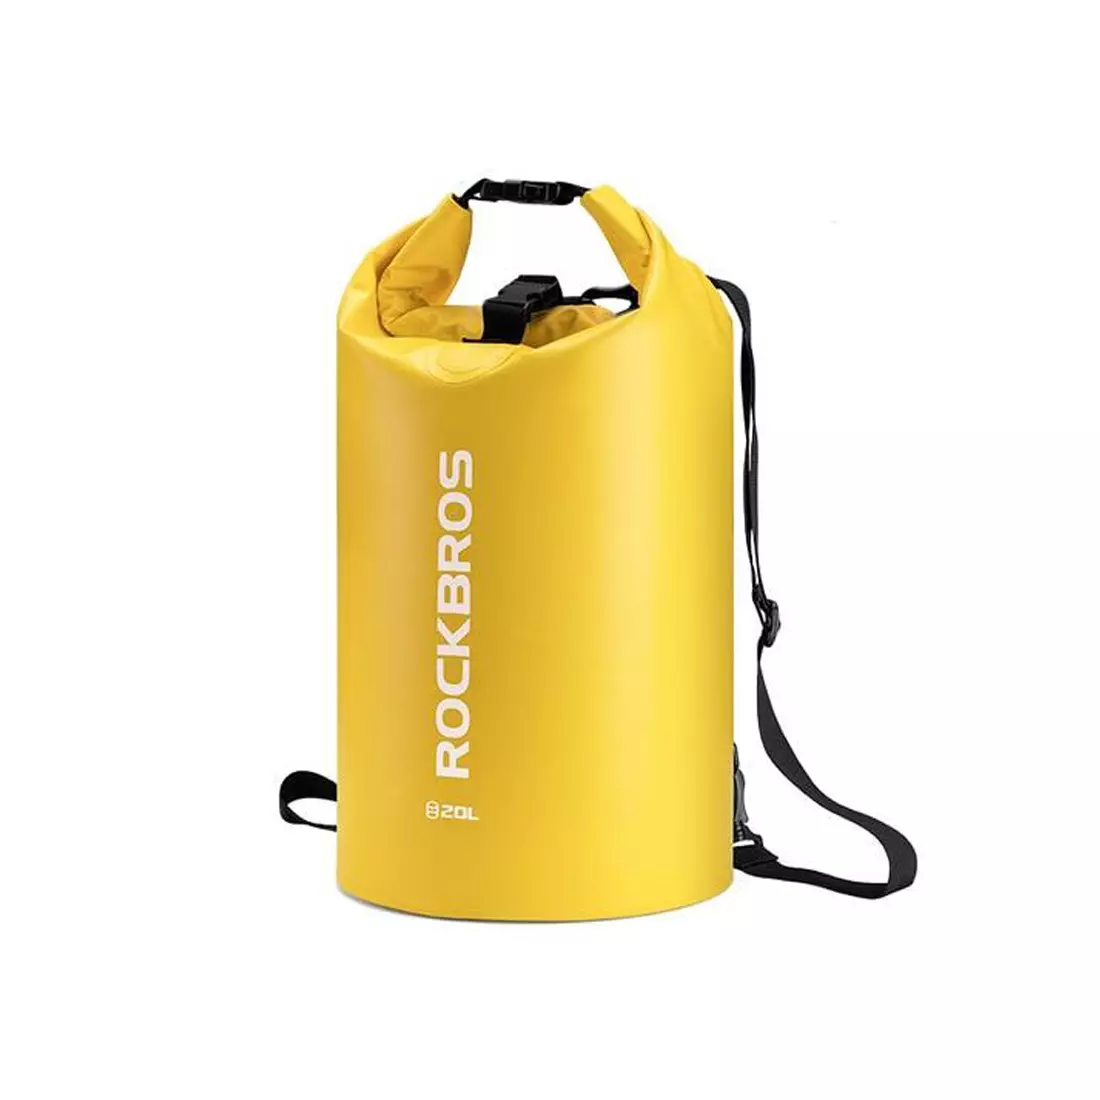 Rockbros vodotěsný batoh / taška 20L, žlutá ST-005Y